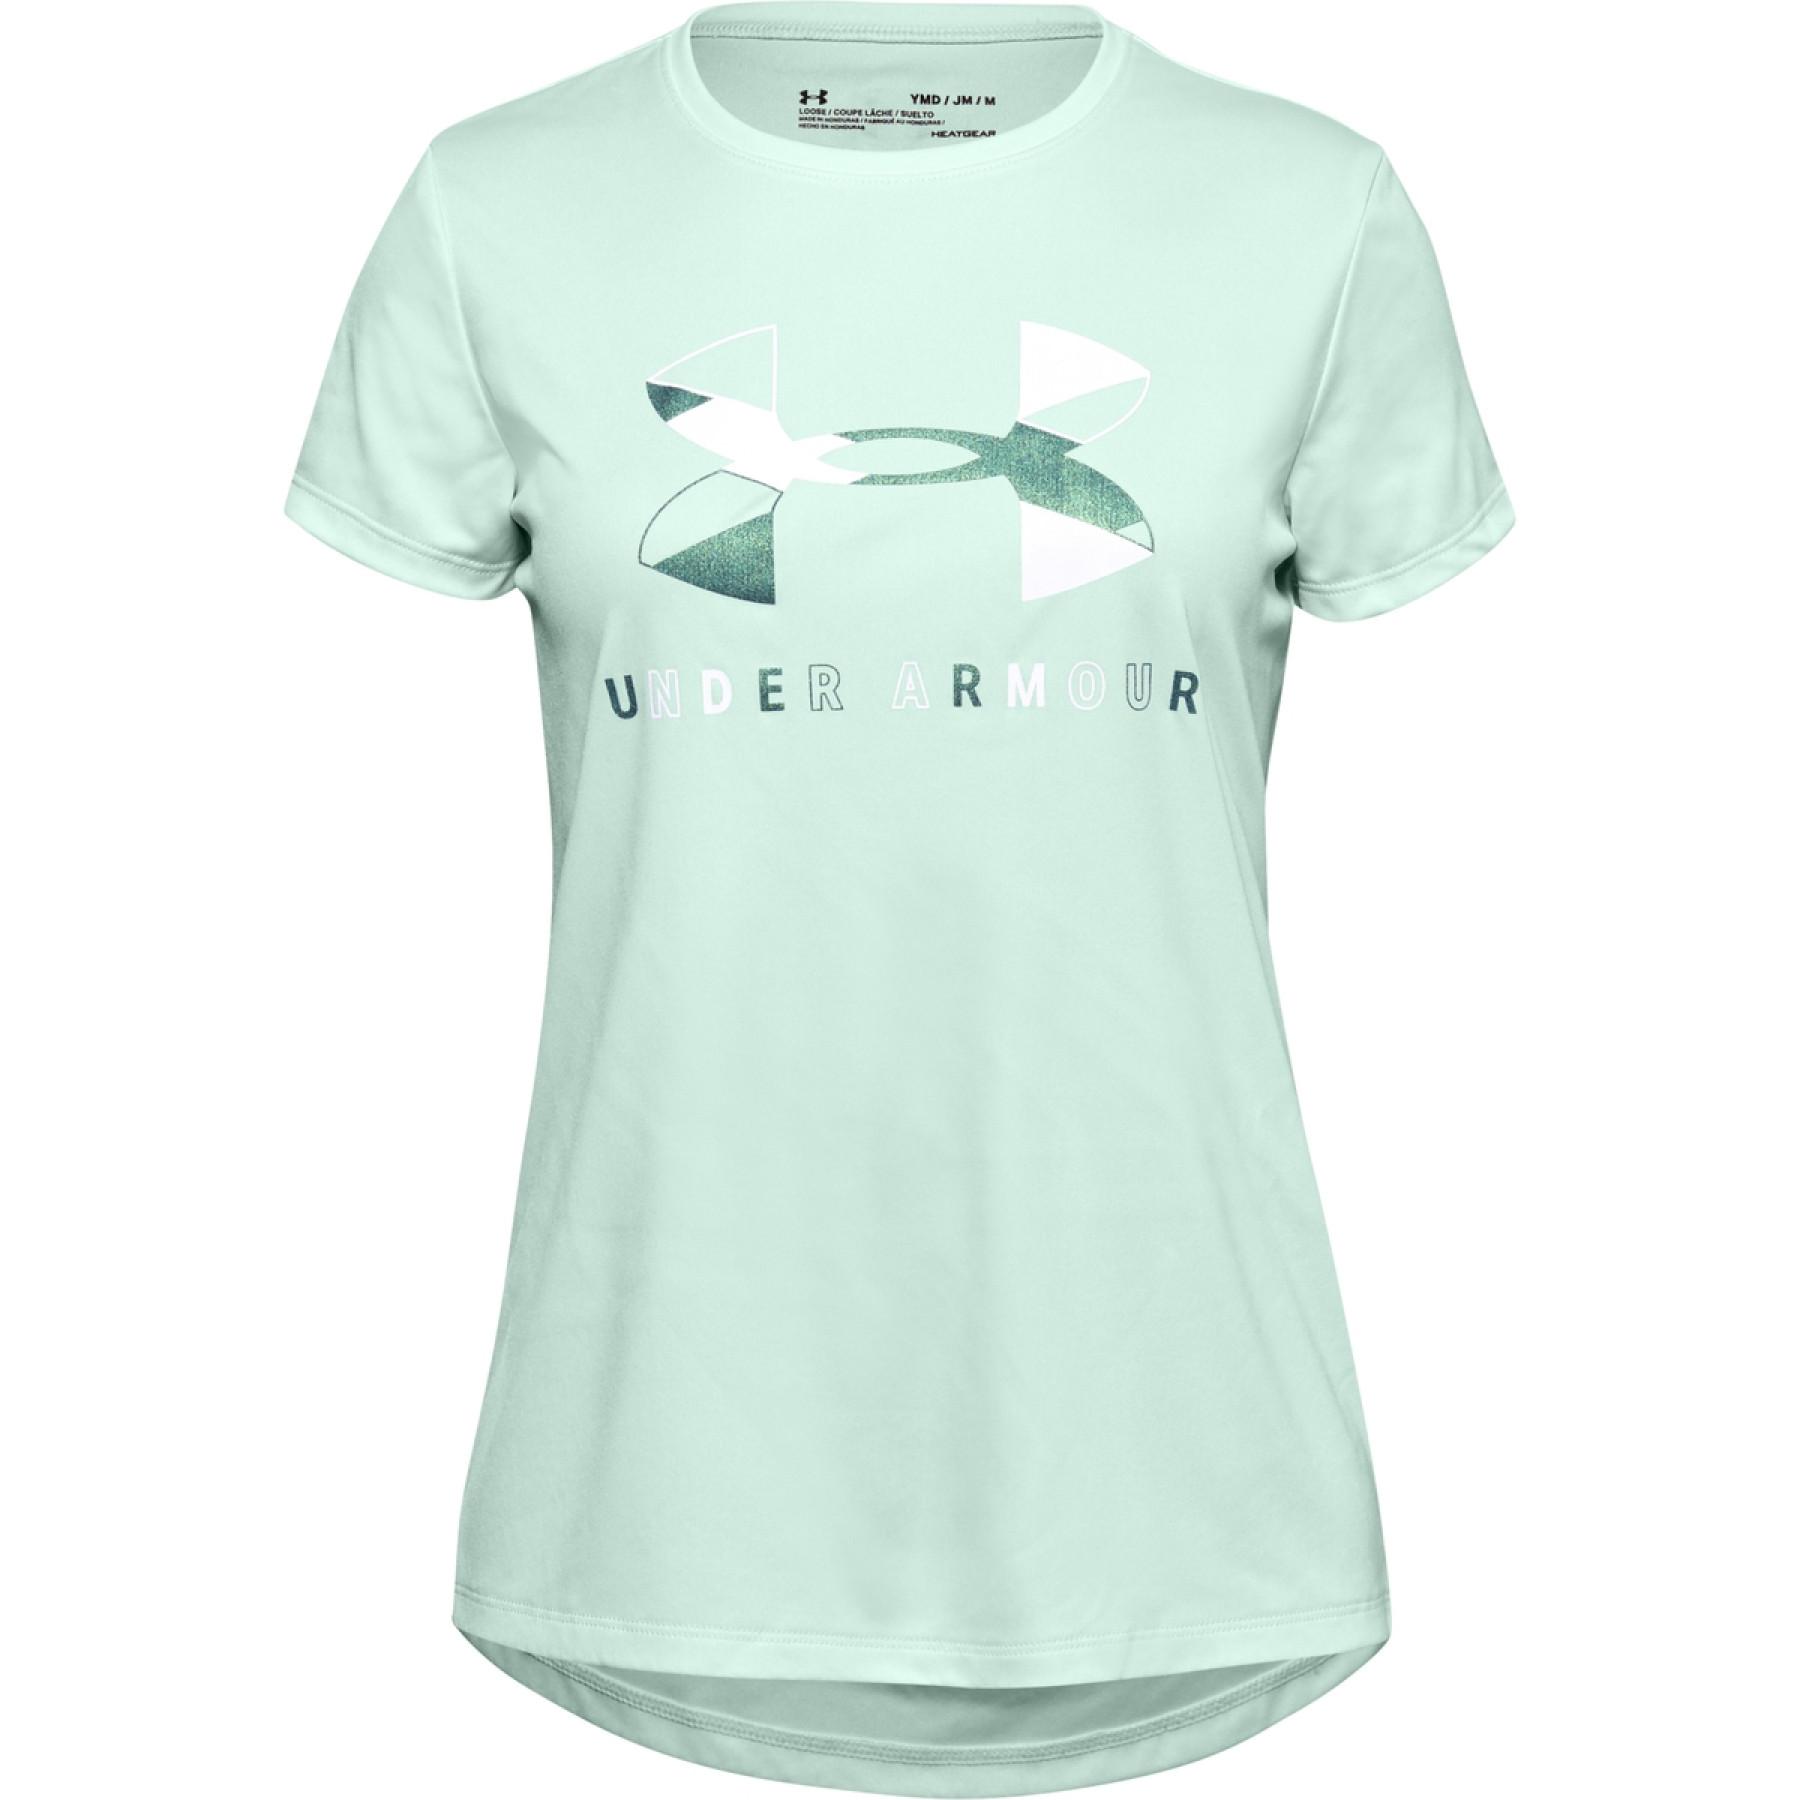 T-shirt de rapariga Under Armour à manches courtes Tech Big Logo